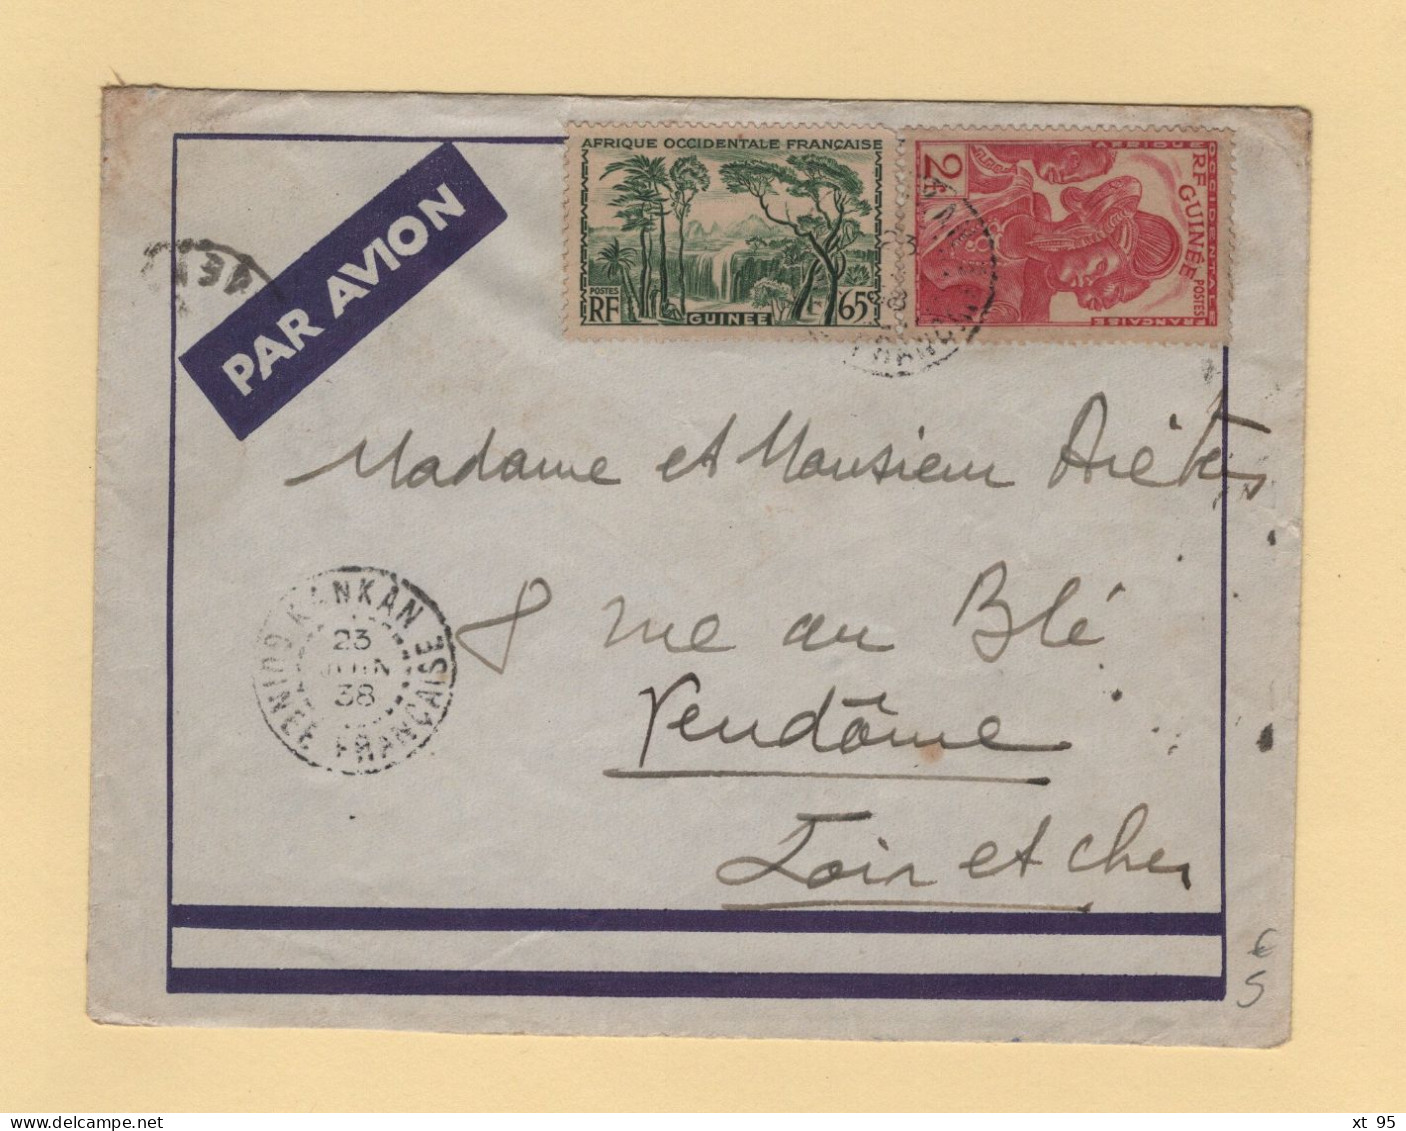 Guinee Francaise - Kankan - 1938 - Par Avion Destination France - Briefe U. Dokumente